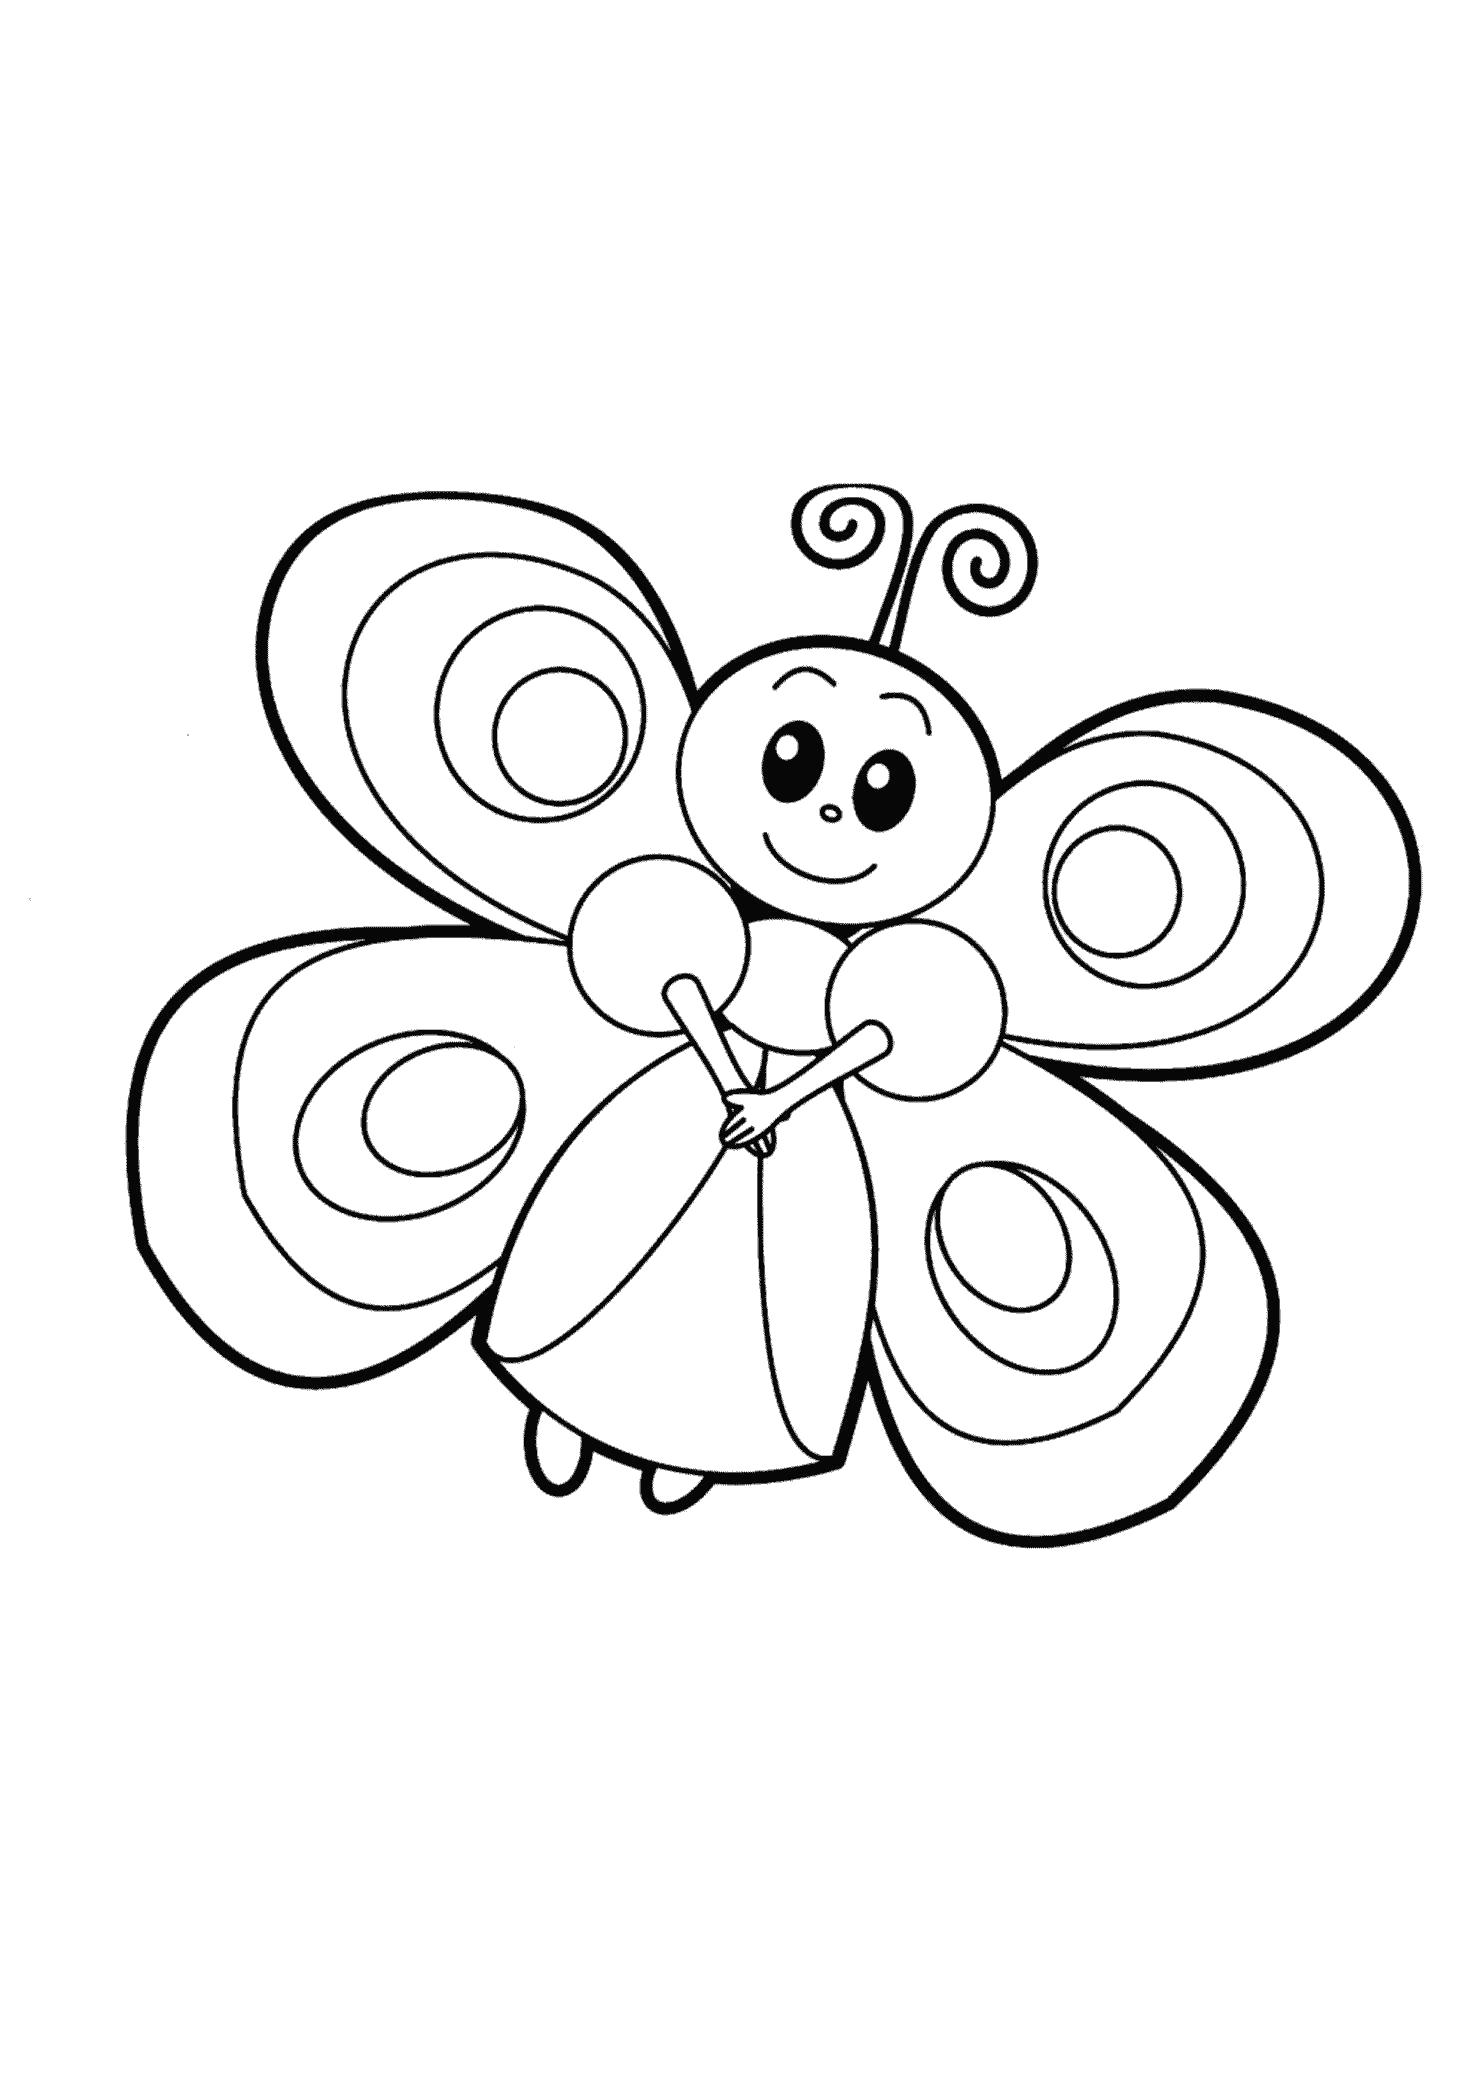 Название: Раскраска Милашка. Категория: бабочка. Теги: бабочка.